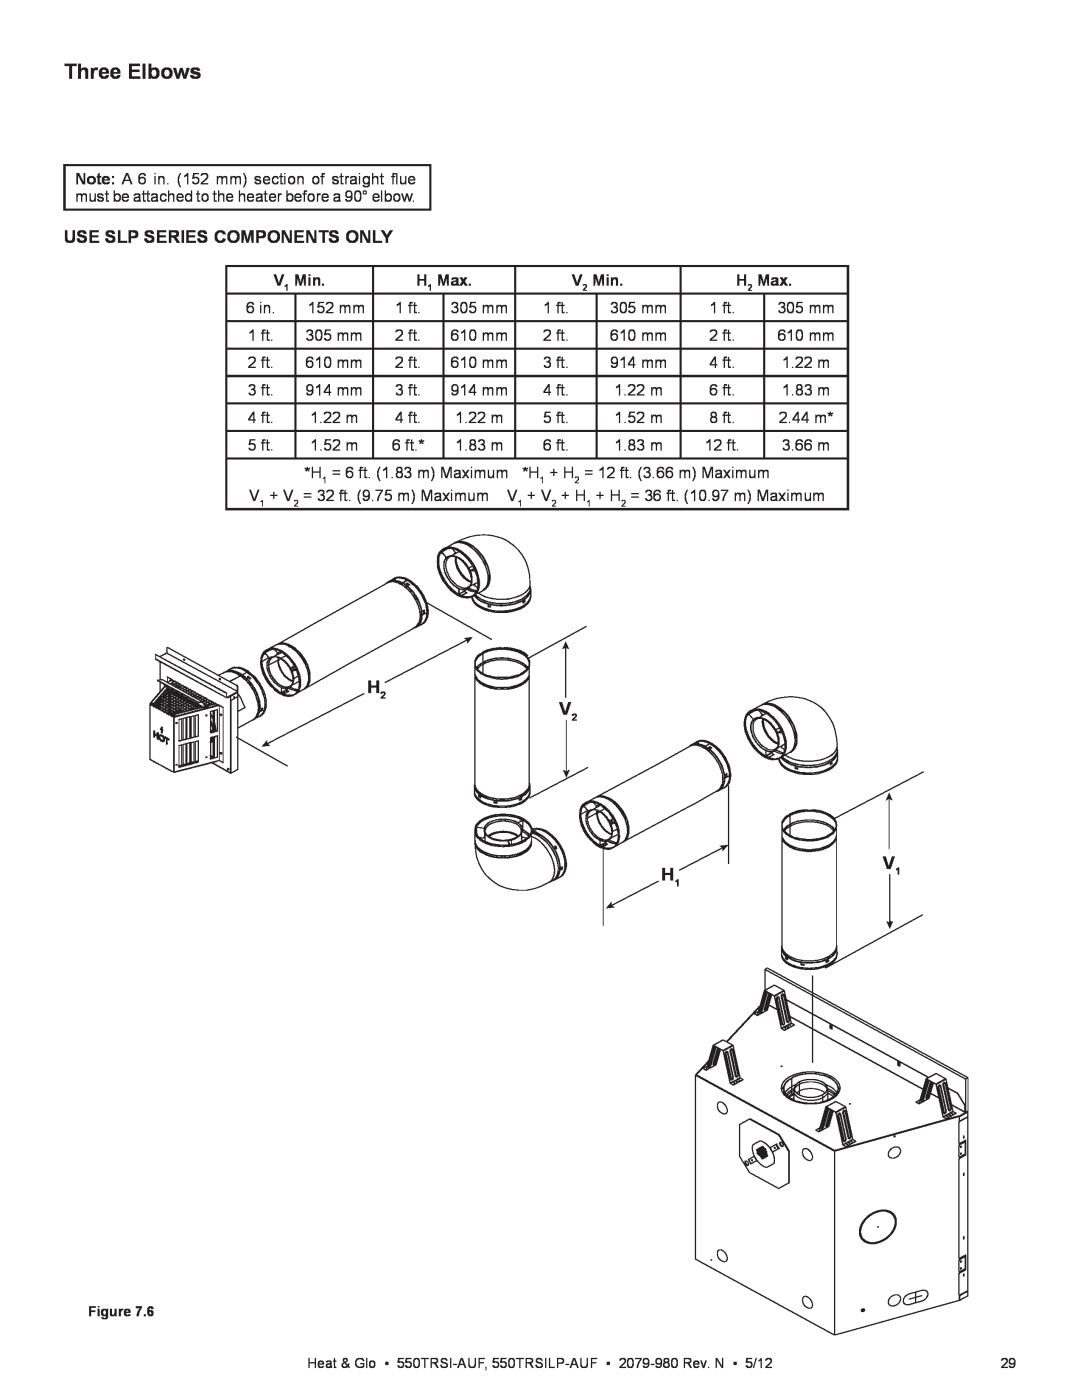 Heat & Glo LifeStyle 550TRSI-AUF Three Elbows, Use Slp Series Components Only, H2 V2, V1 Min, H1 Max, V2 Min, H2 Max 